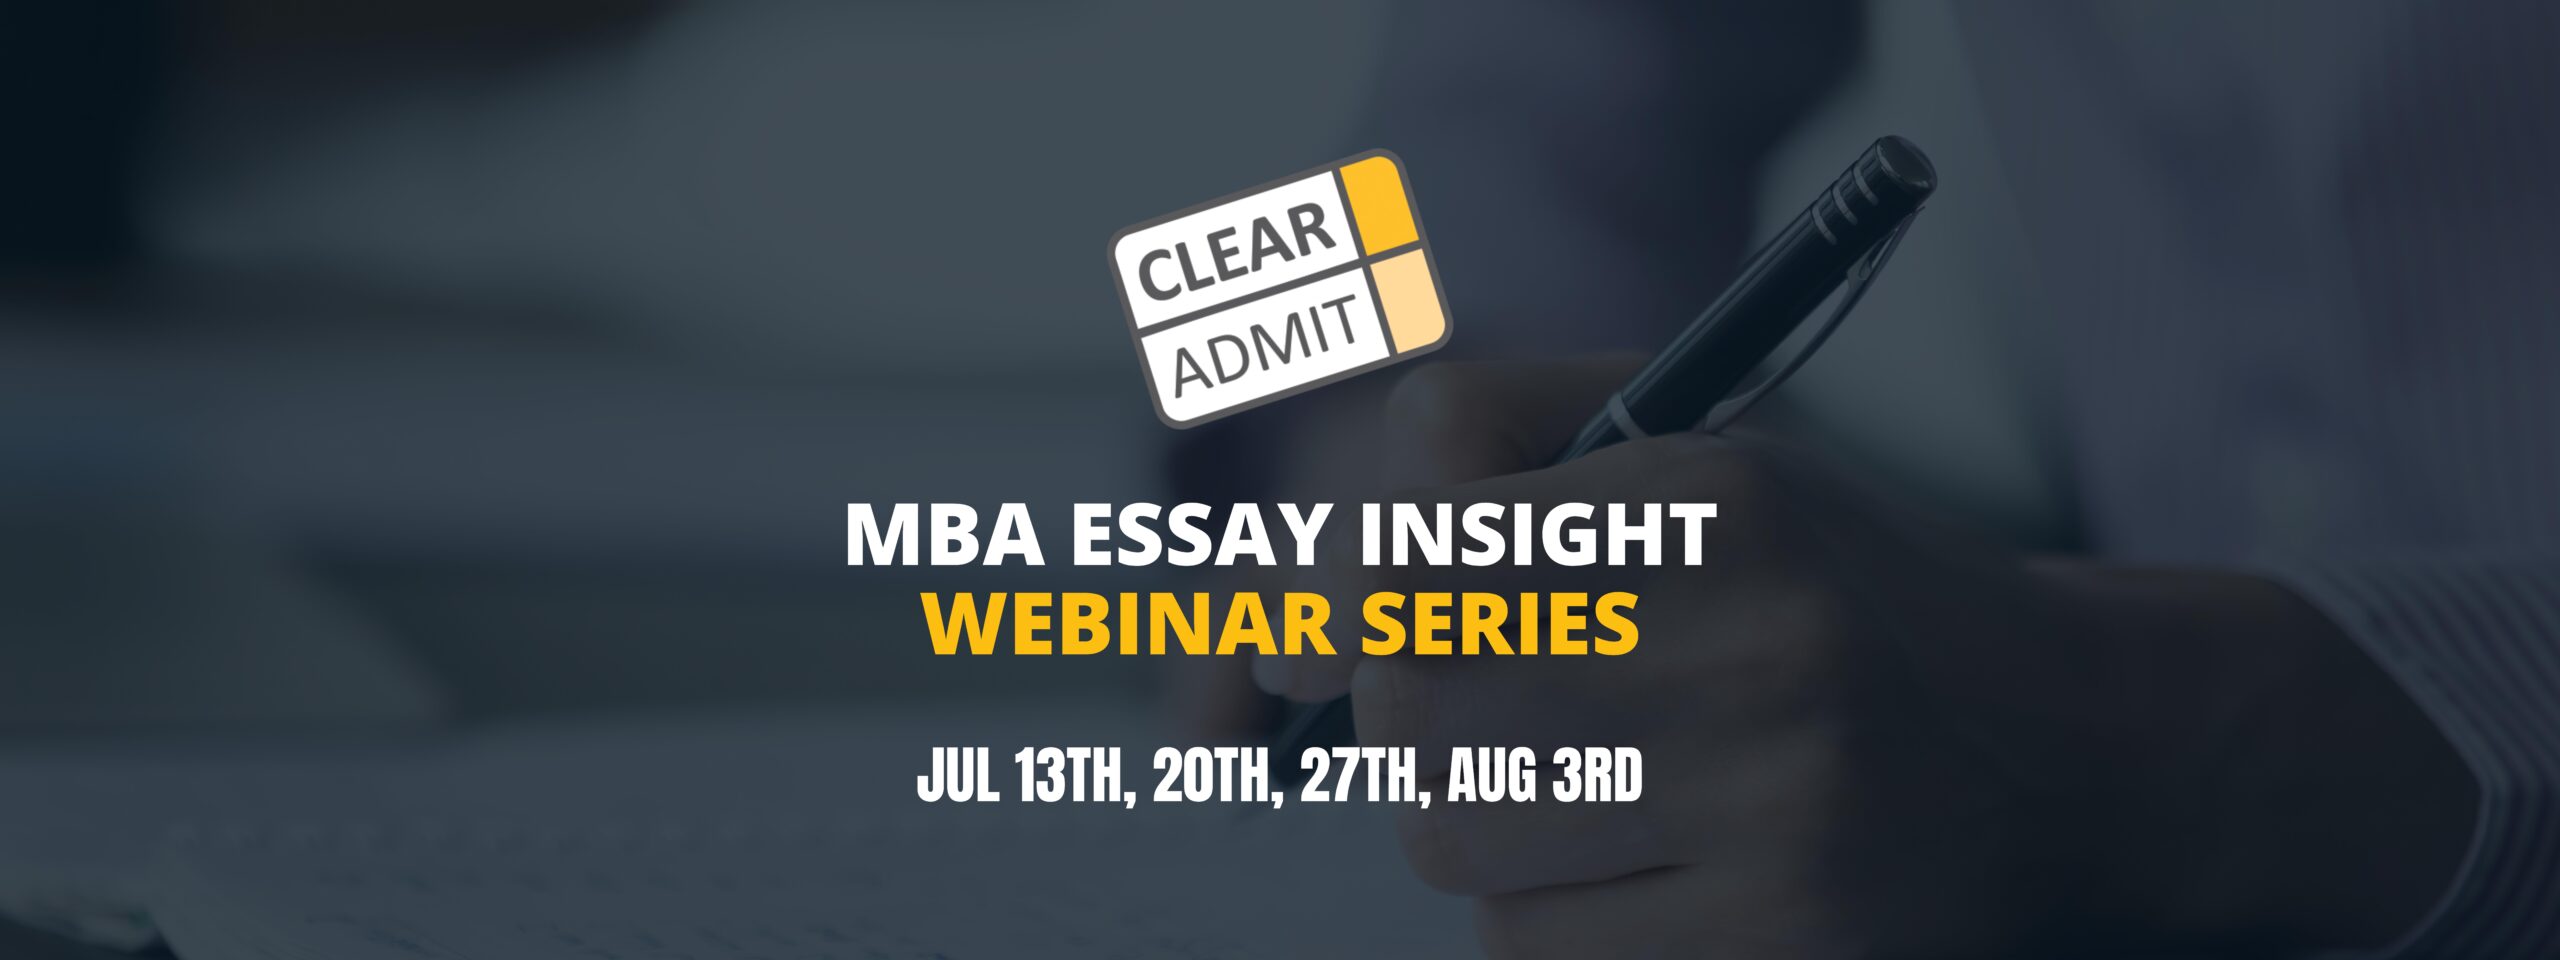 Image for MBA Essay Insight Webinar Series Summer 2022